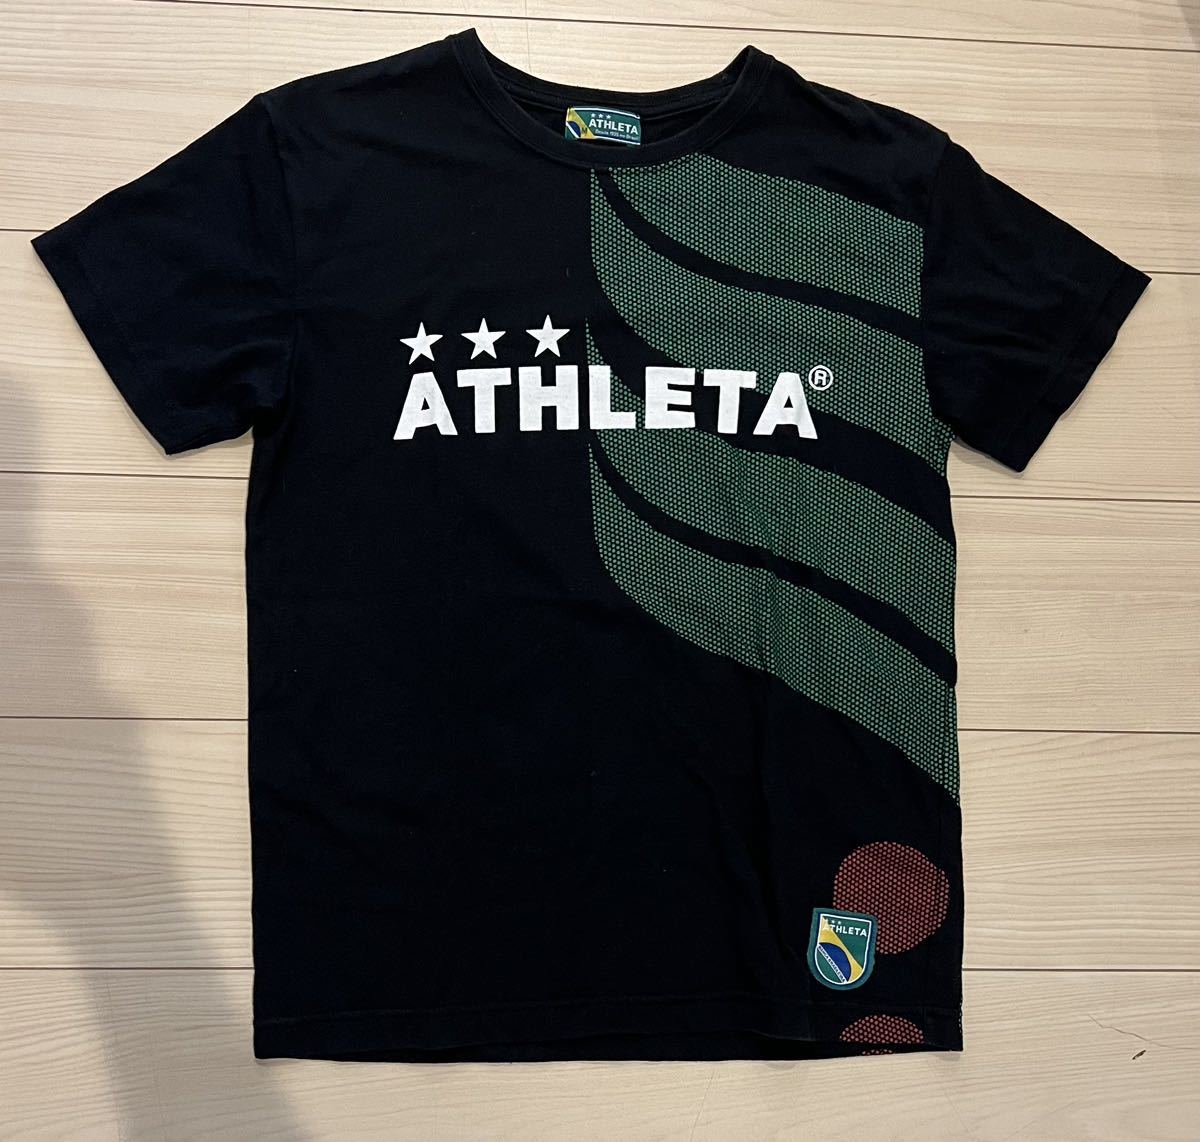 ATHLETA アスレタ 半袖Tシャツ Mサイズの画像1